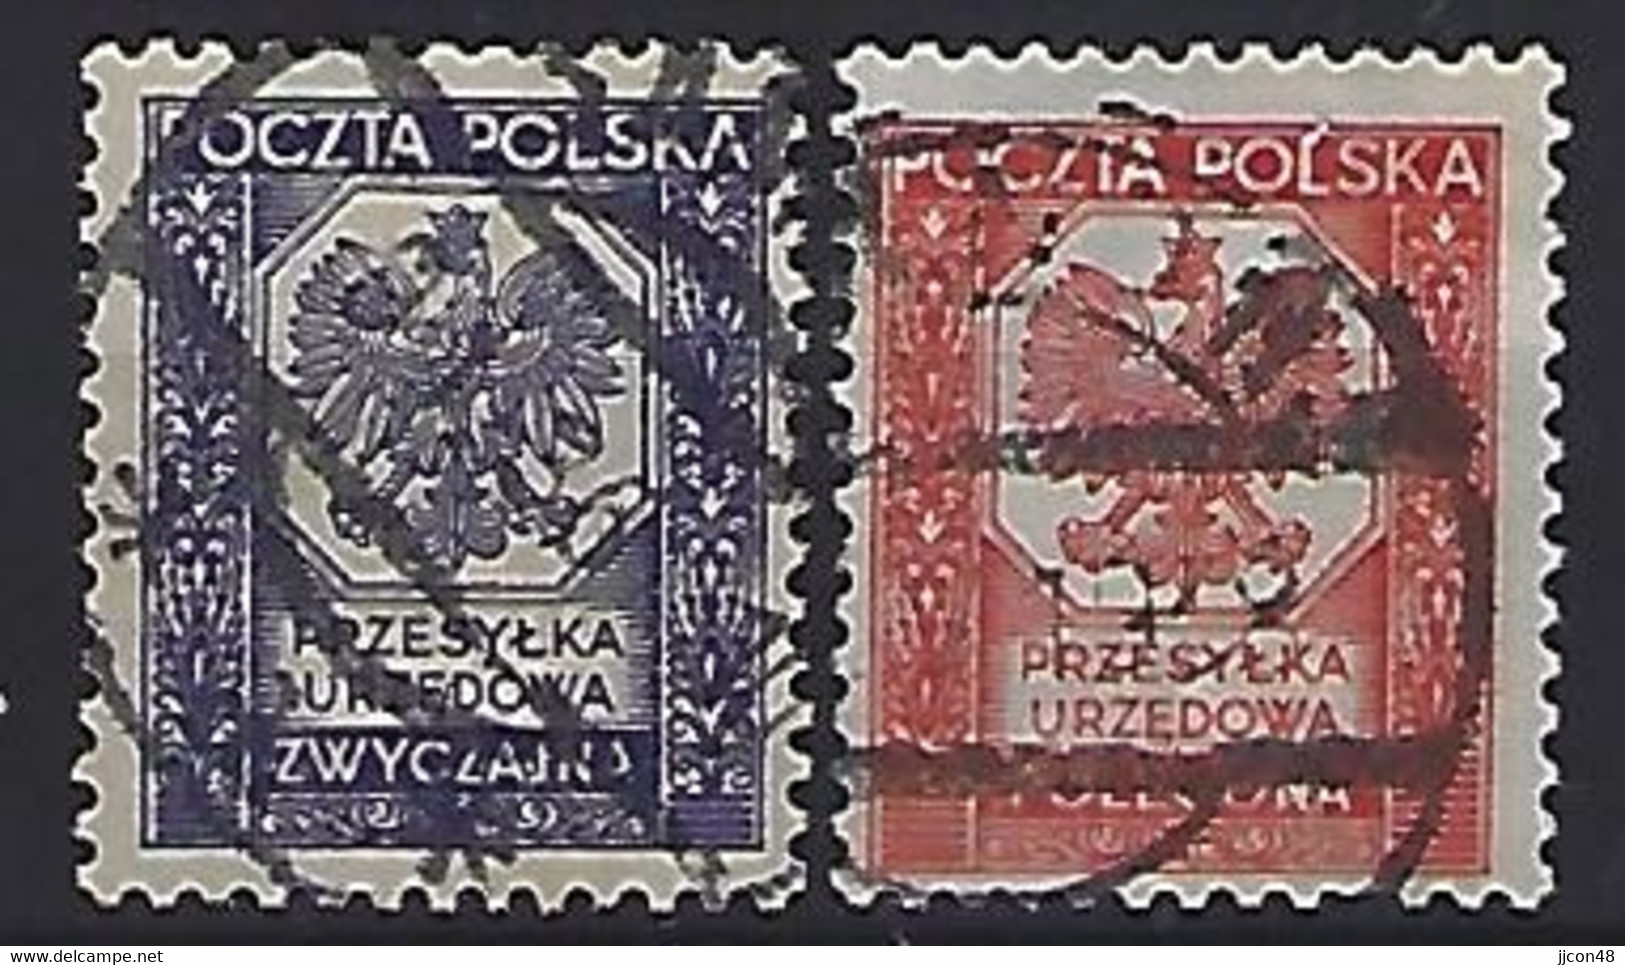 Poland 1935  Officials (o) Mi.19-20 - Dienstzegels